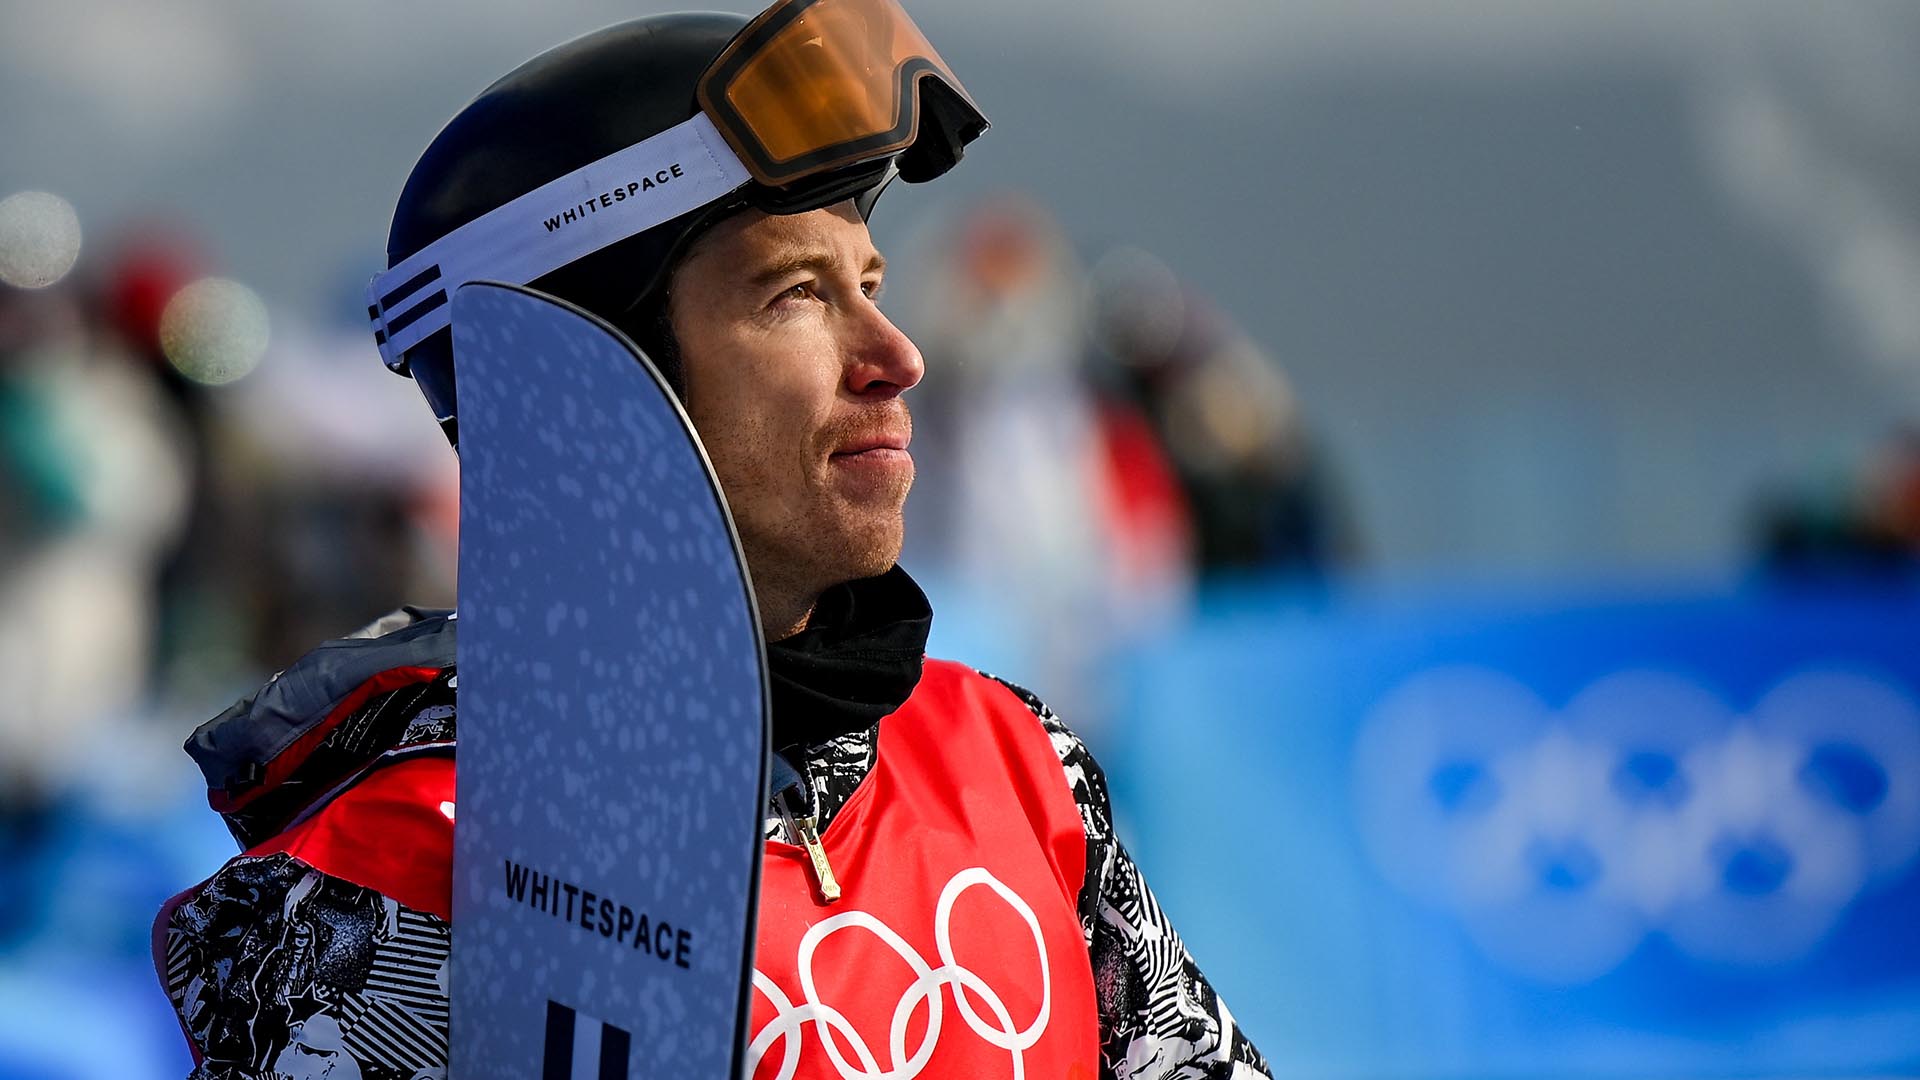 Shaun White's Gold Lands NBC's Highest PyeongChang Olympics